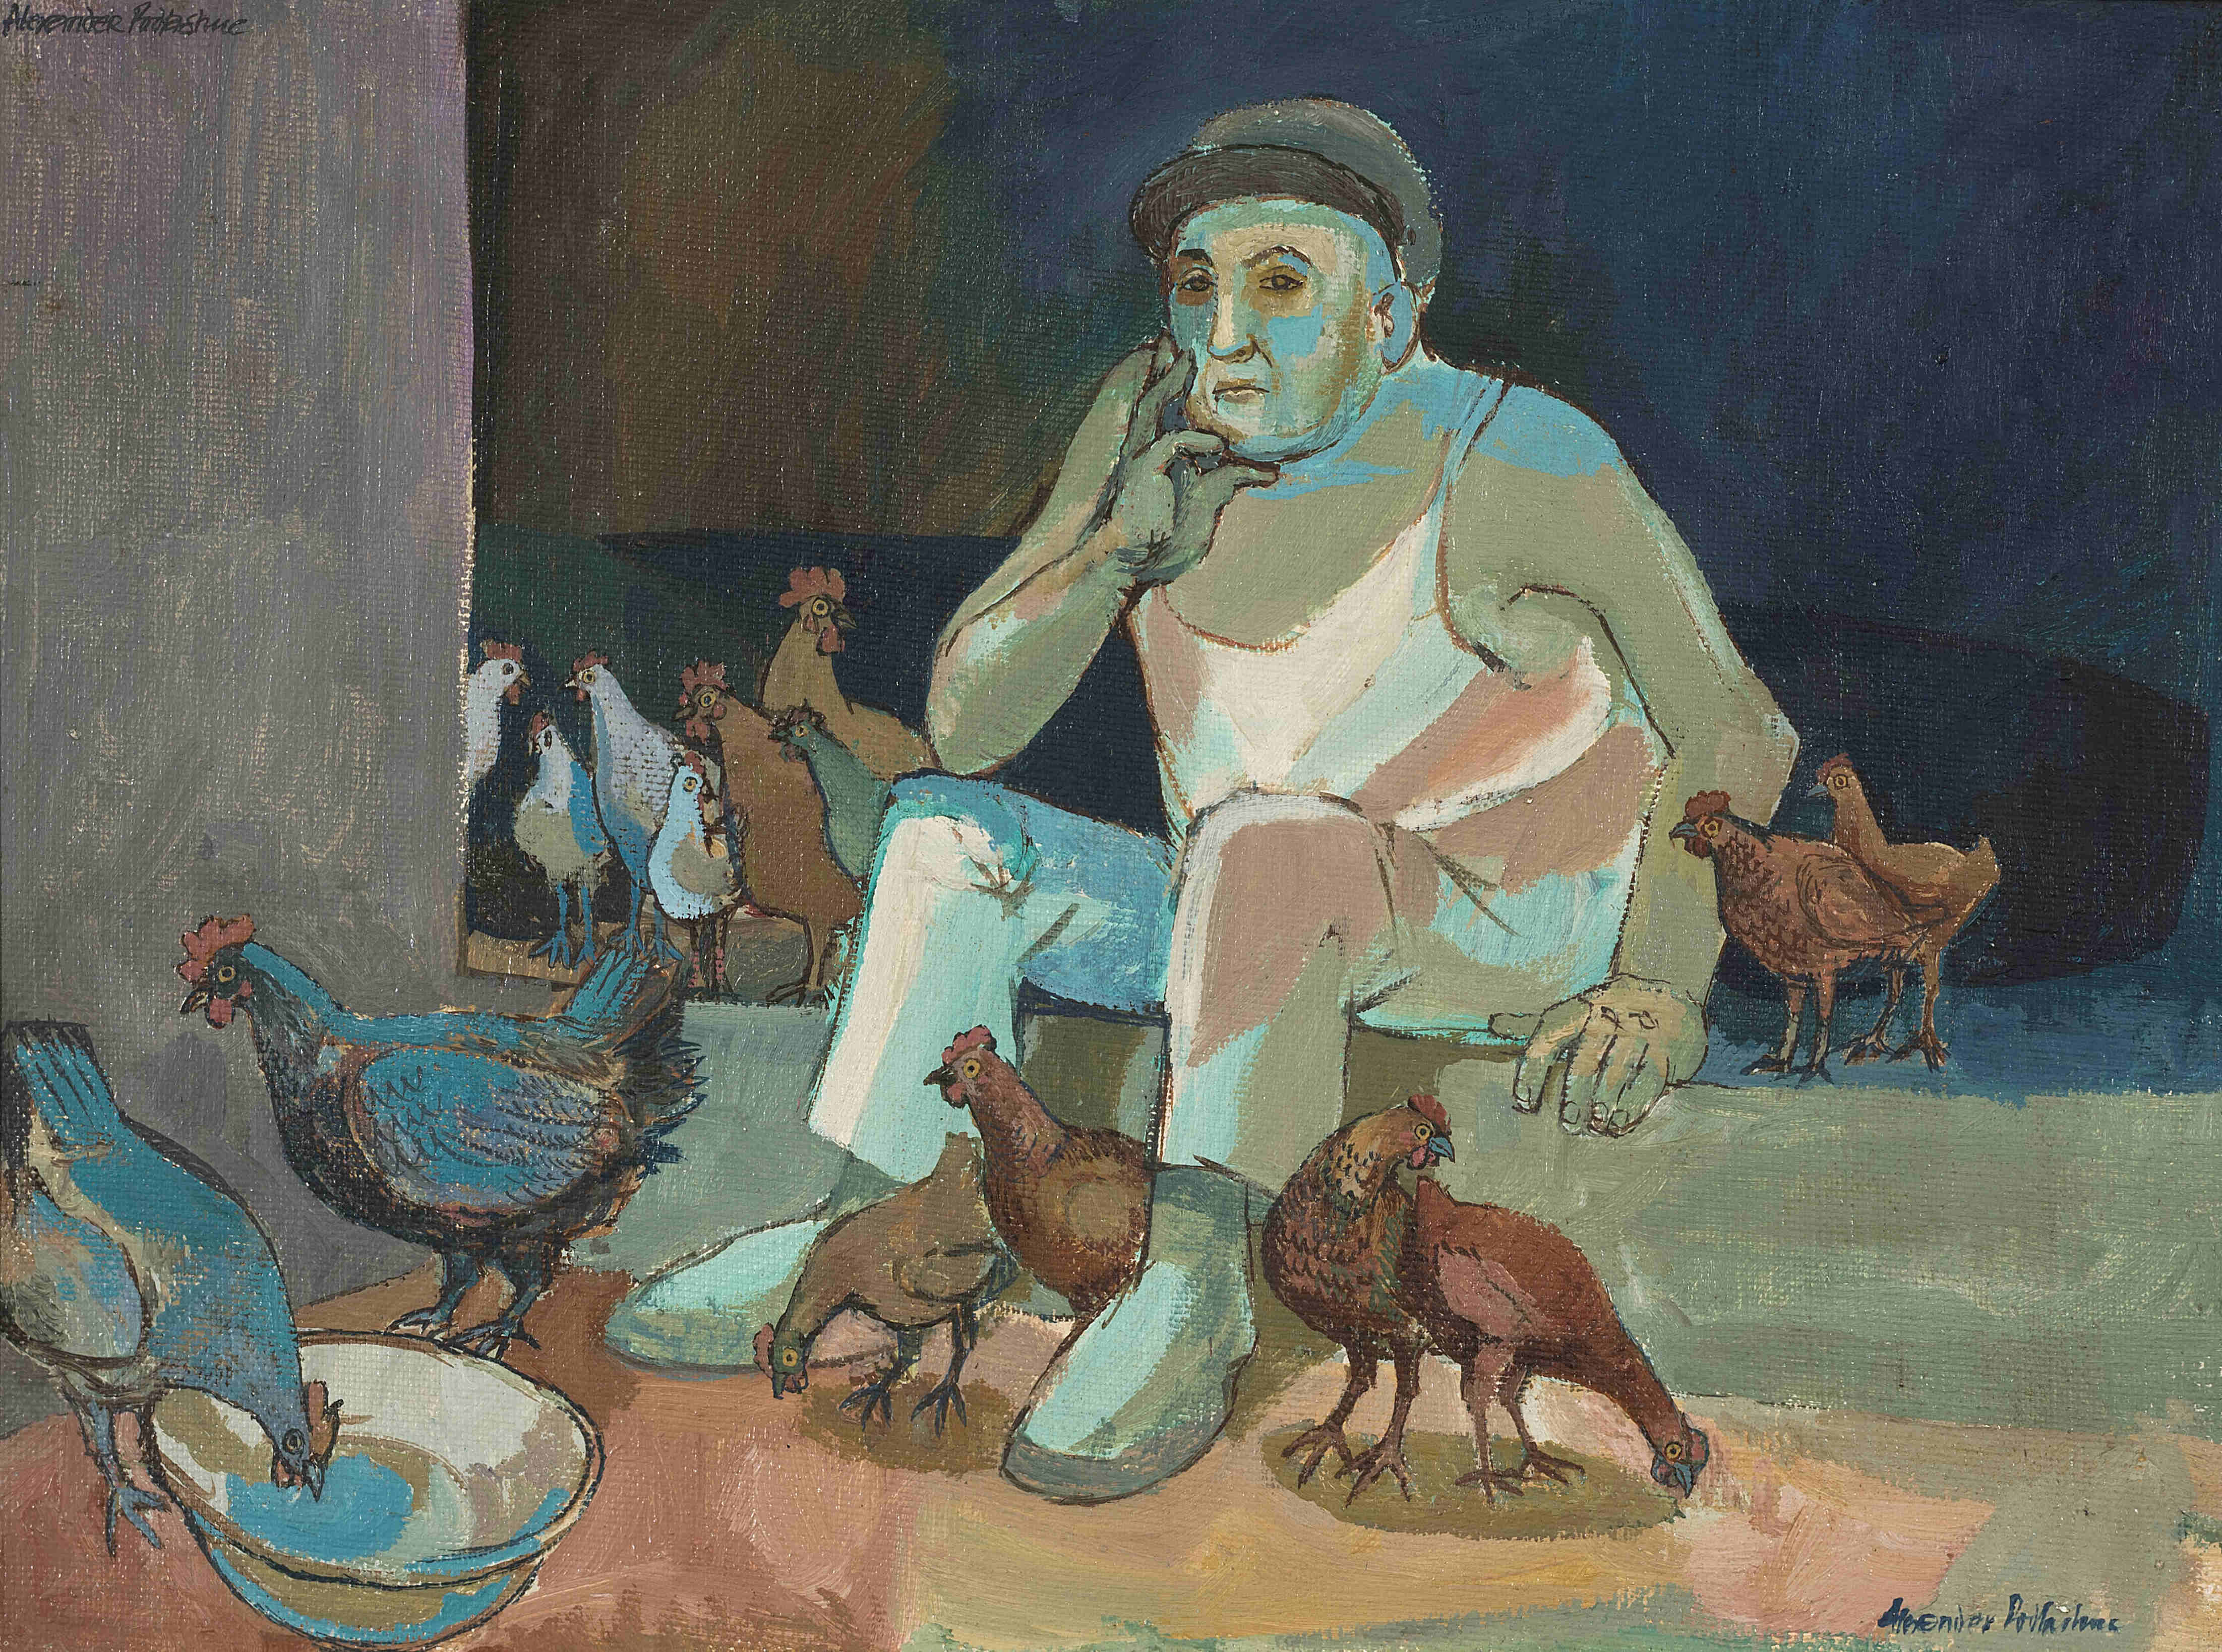 Alexander Podlashuc; Man with Chickens